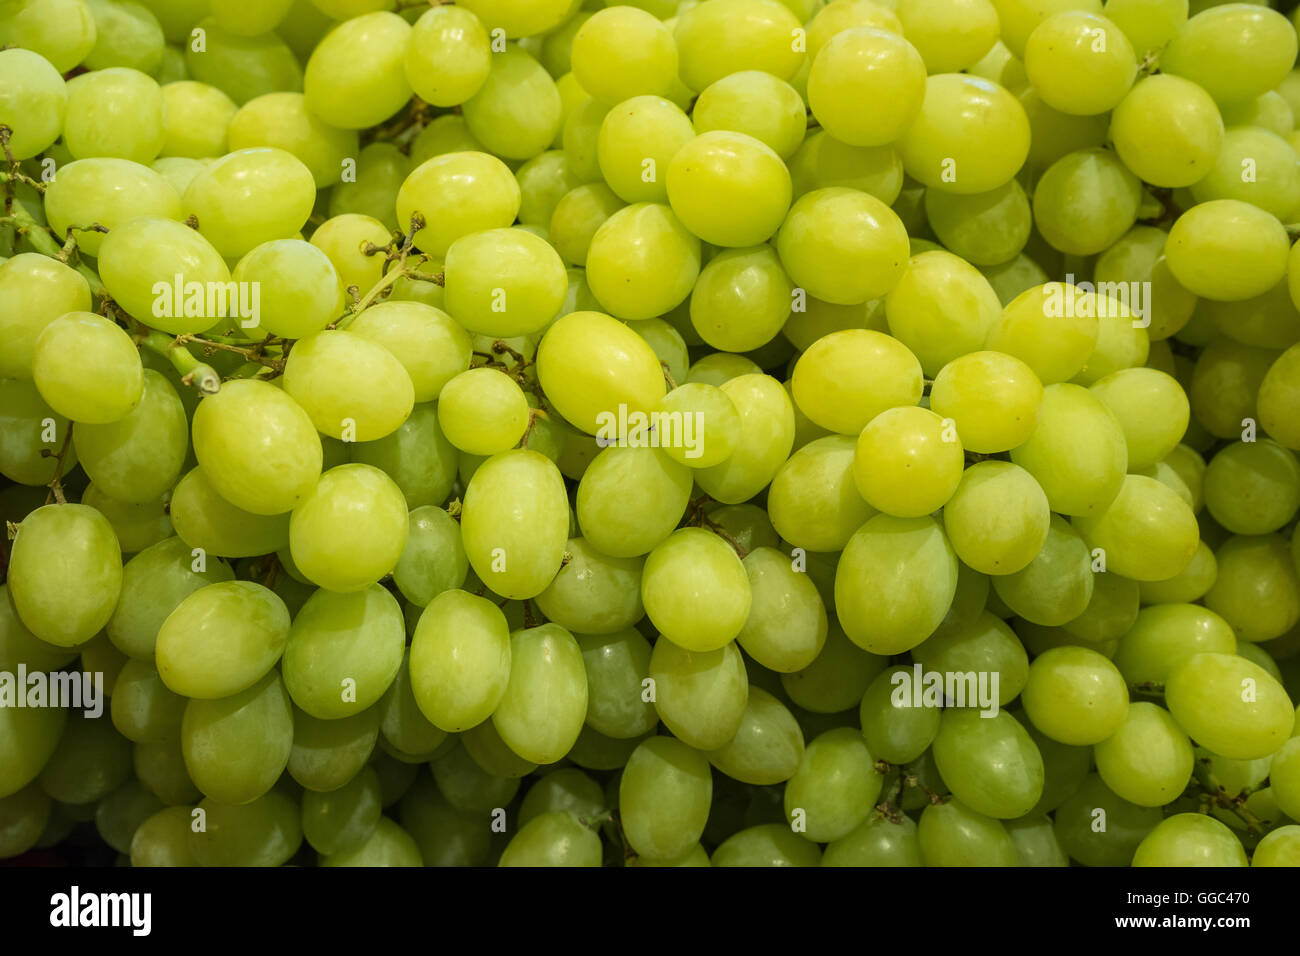 https://c8.alamy.com/comp/GGC470/juicy-seedless-green-grapes-for-sale-GGC470.jpg